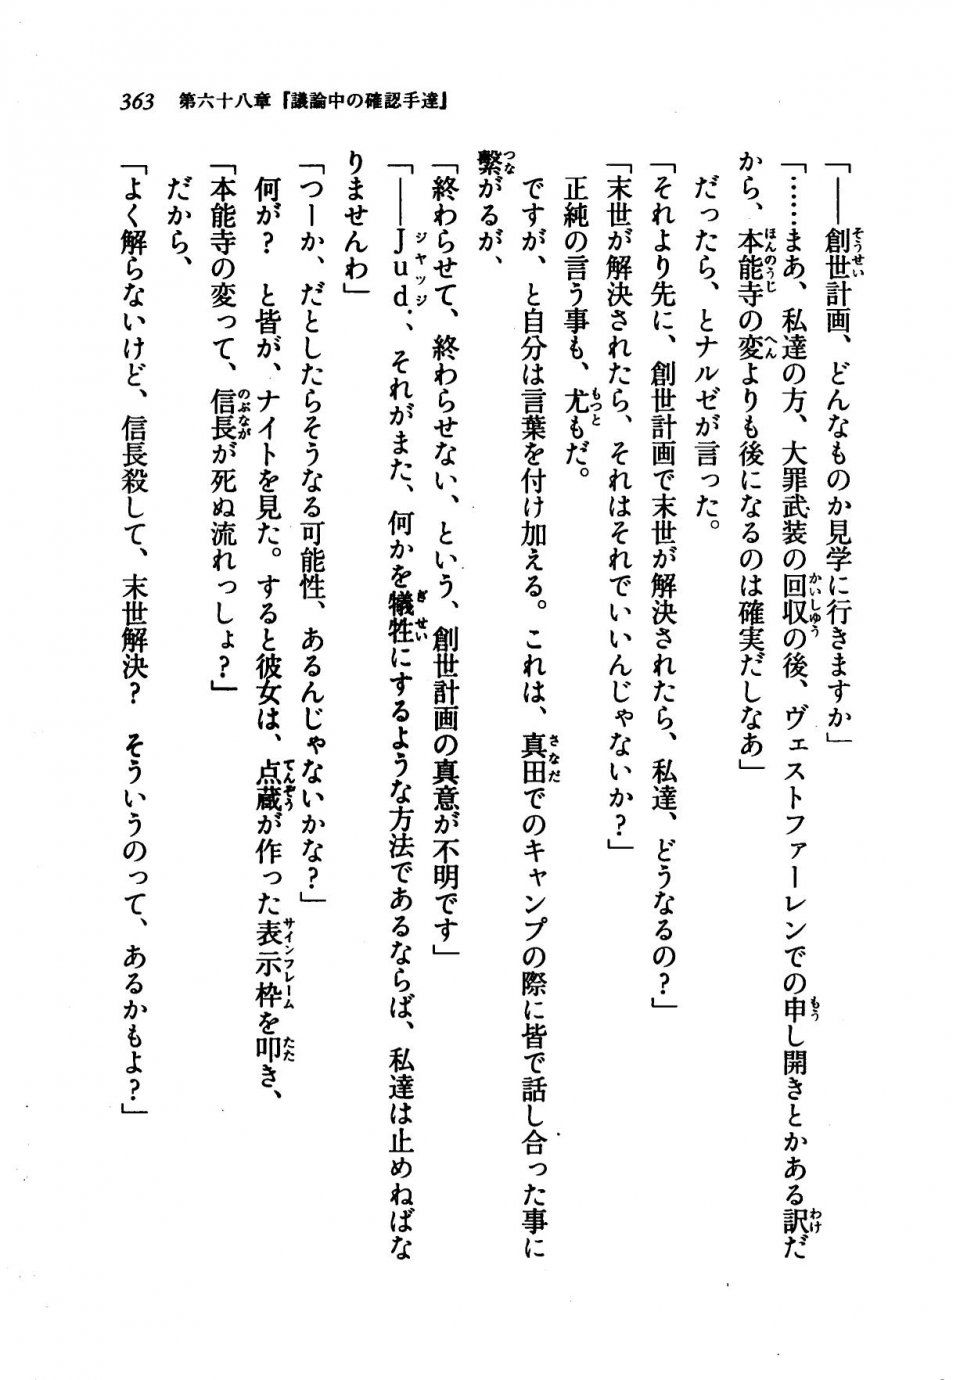 Kyoukai Senjou no Horizon LN Vol 21(8C) Part 1 - Photo #362